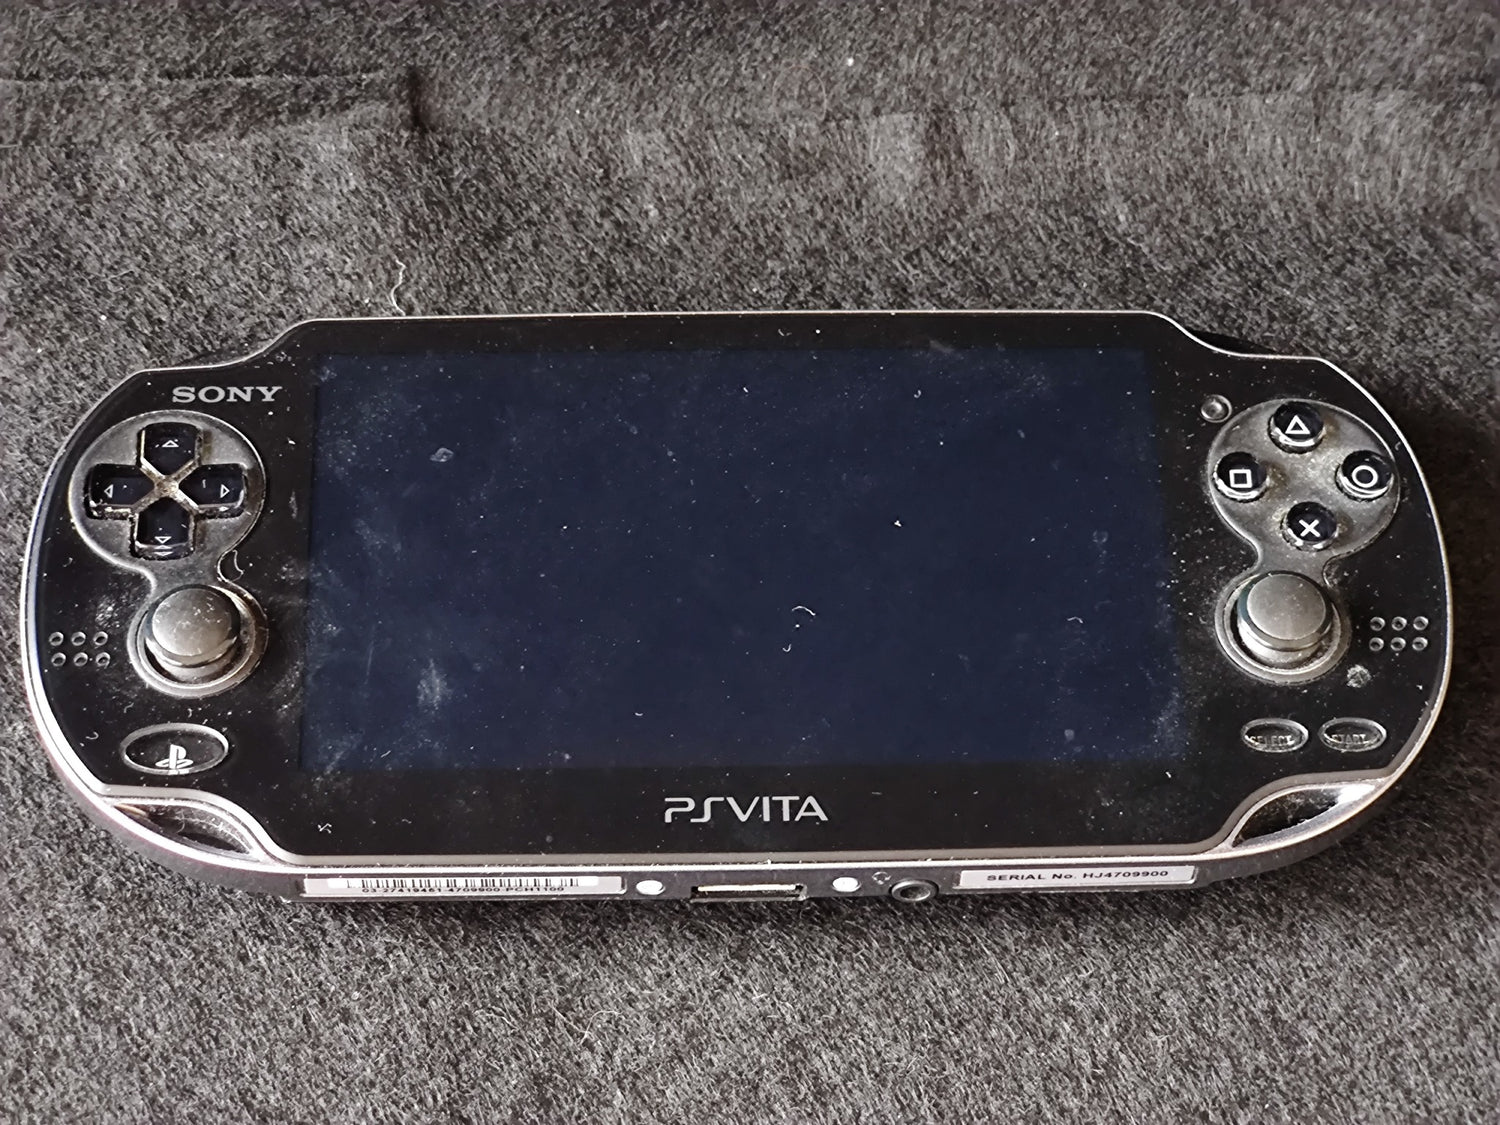 SONY PS Vita PCH-1100 Black Console, w/Manual Box set, Working 